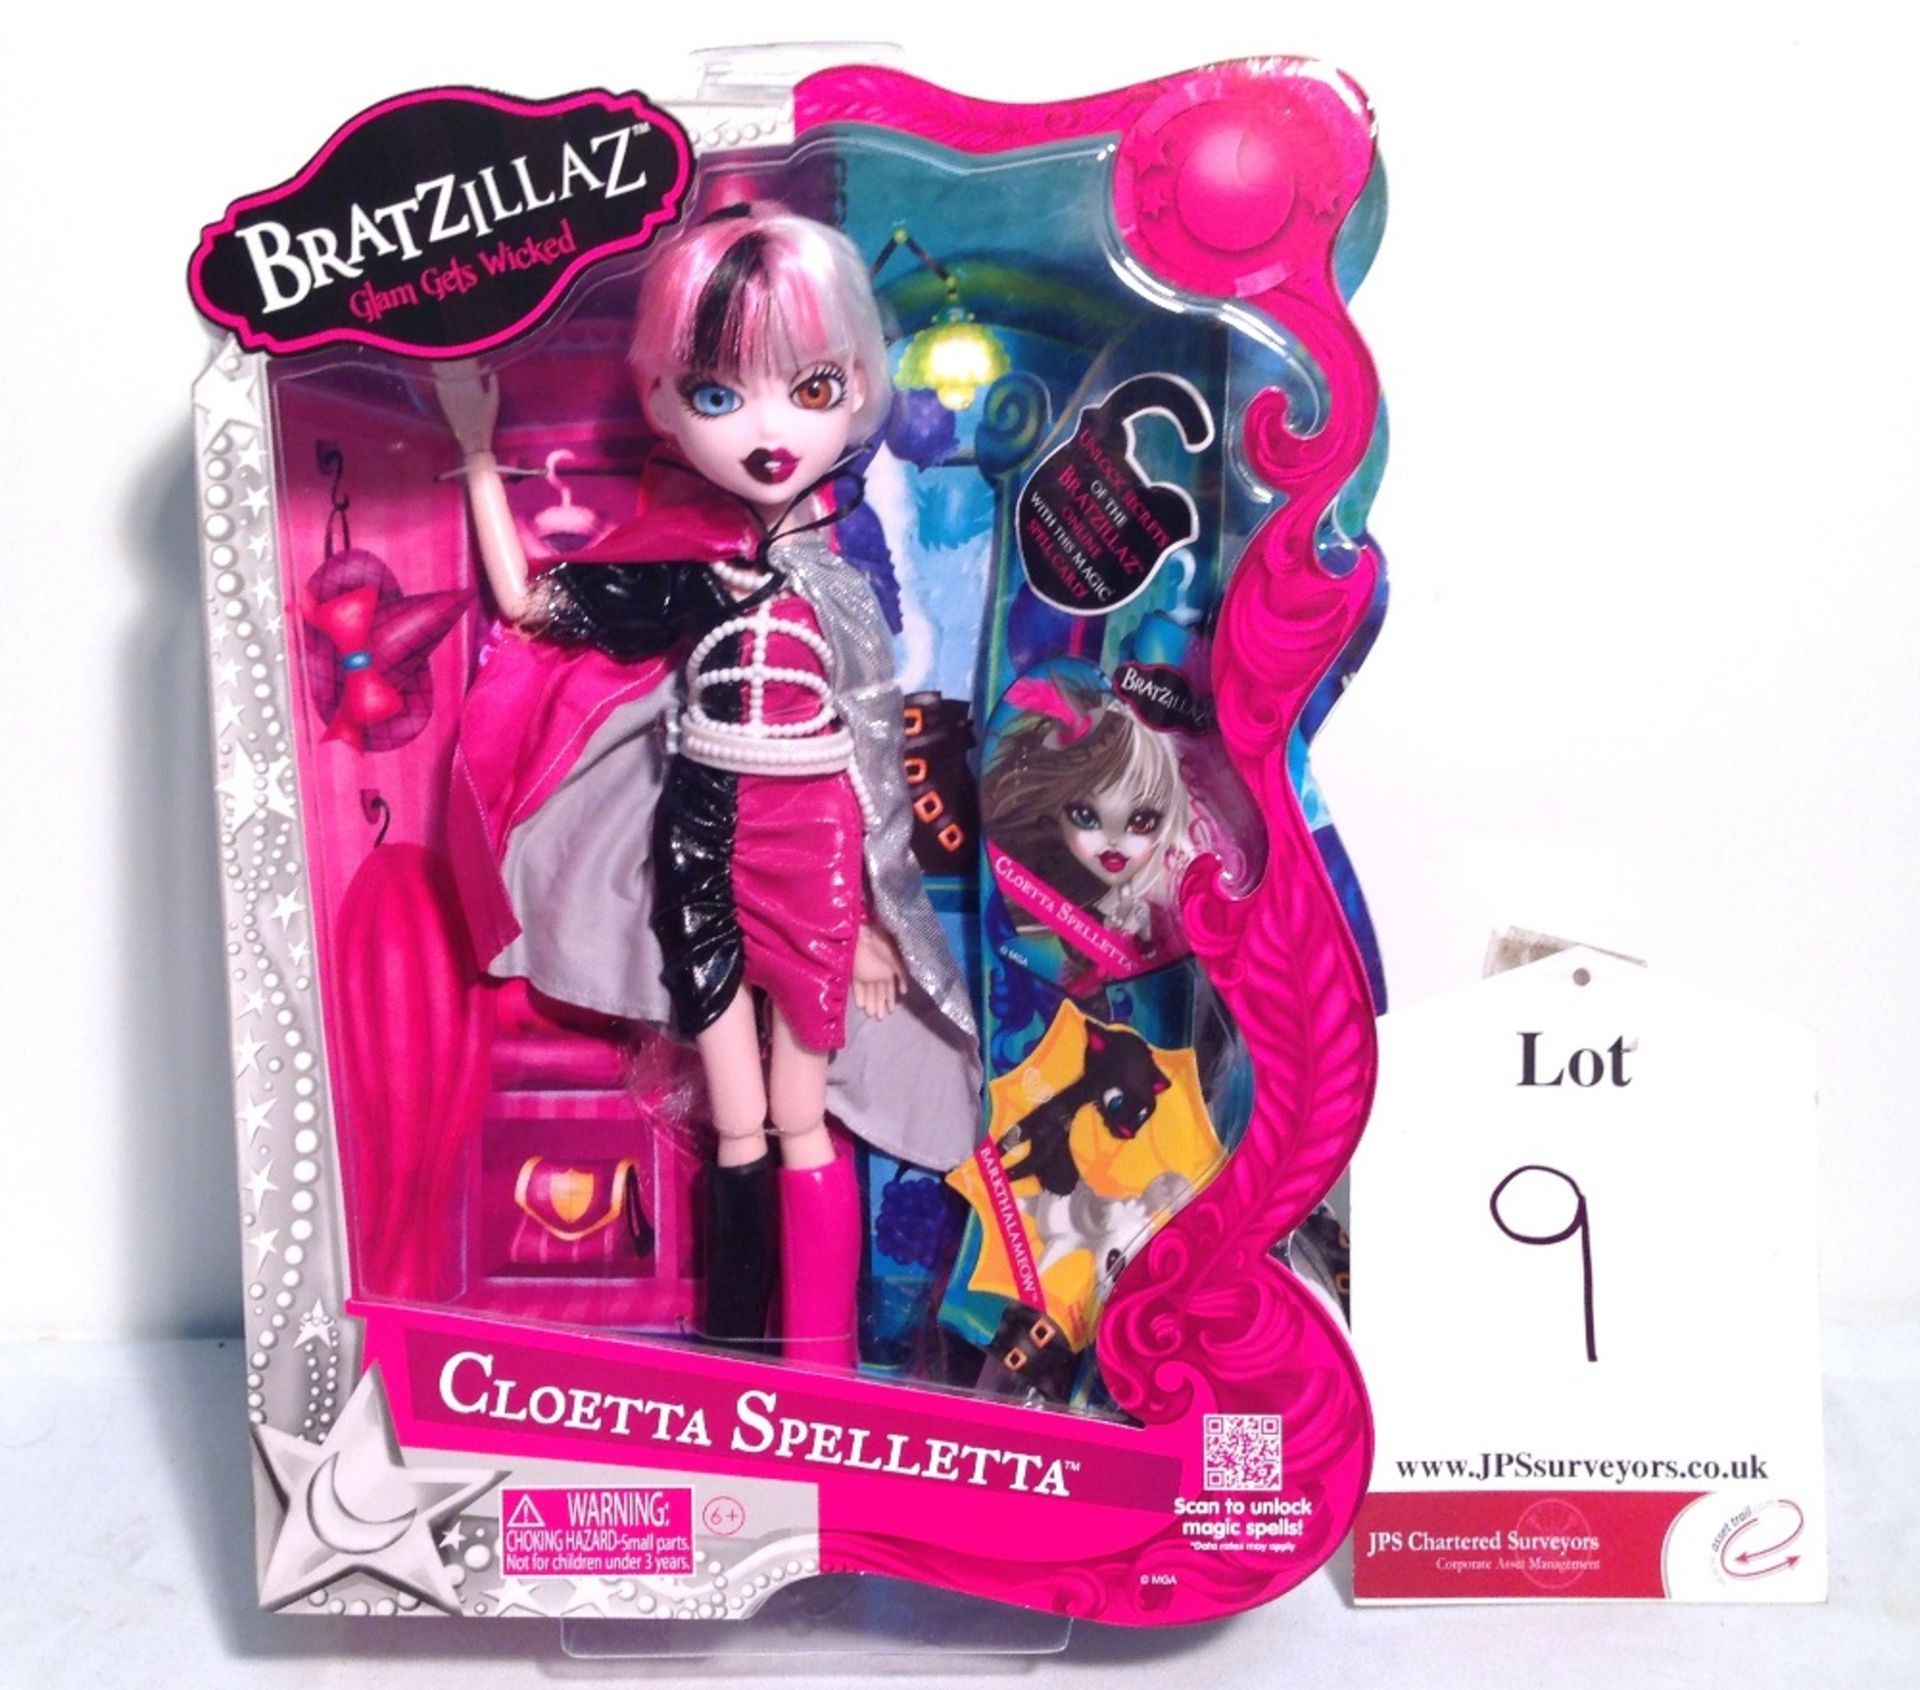 8 x Bratzillas - Cloetta Spelletta  - Glam gets wicked dolls